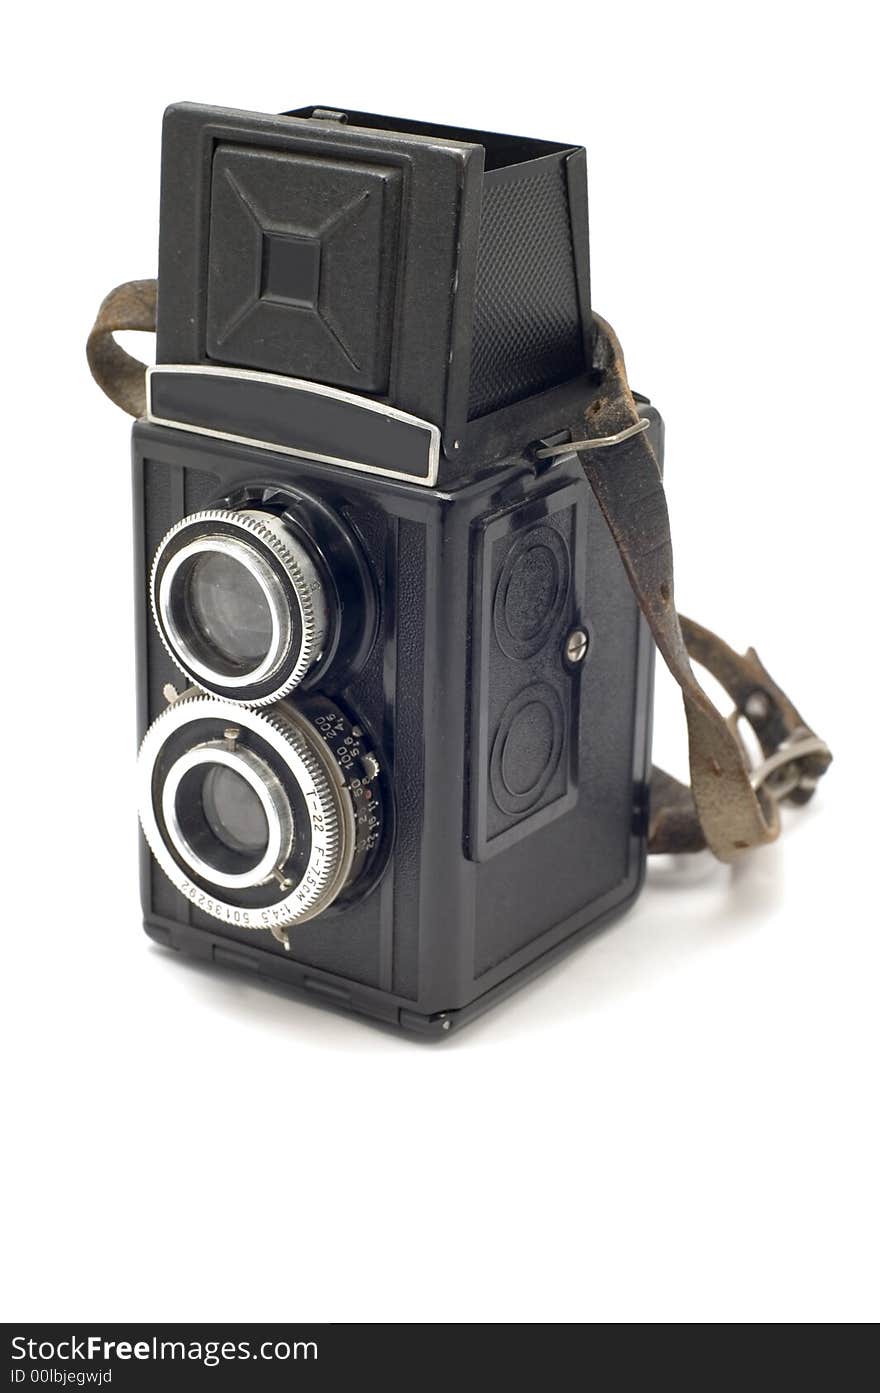 Series object on white - medium format camera